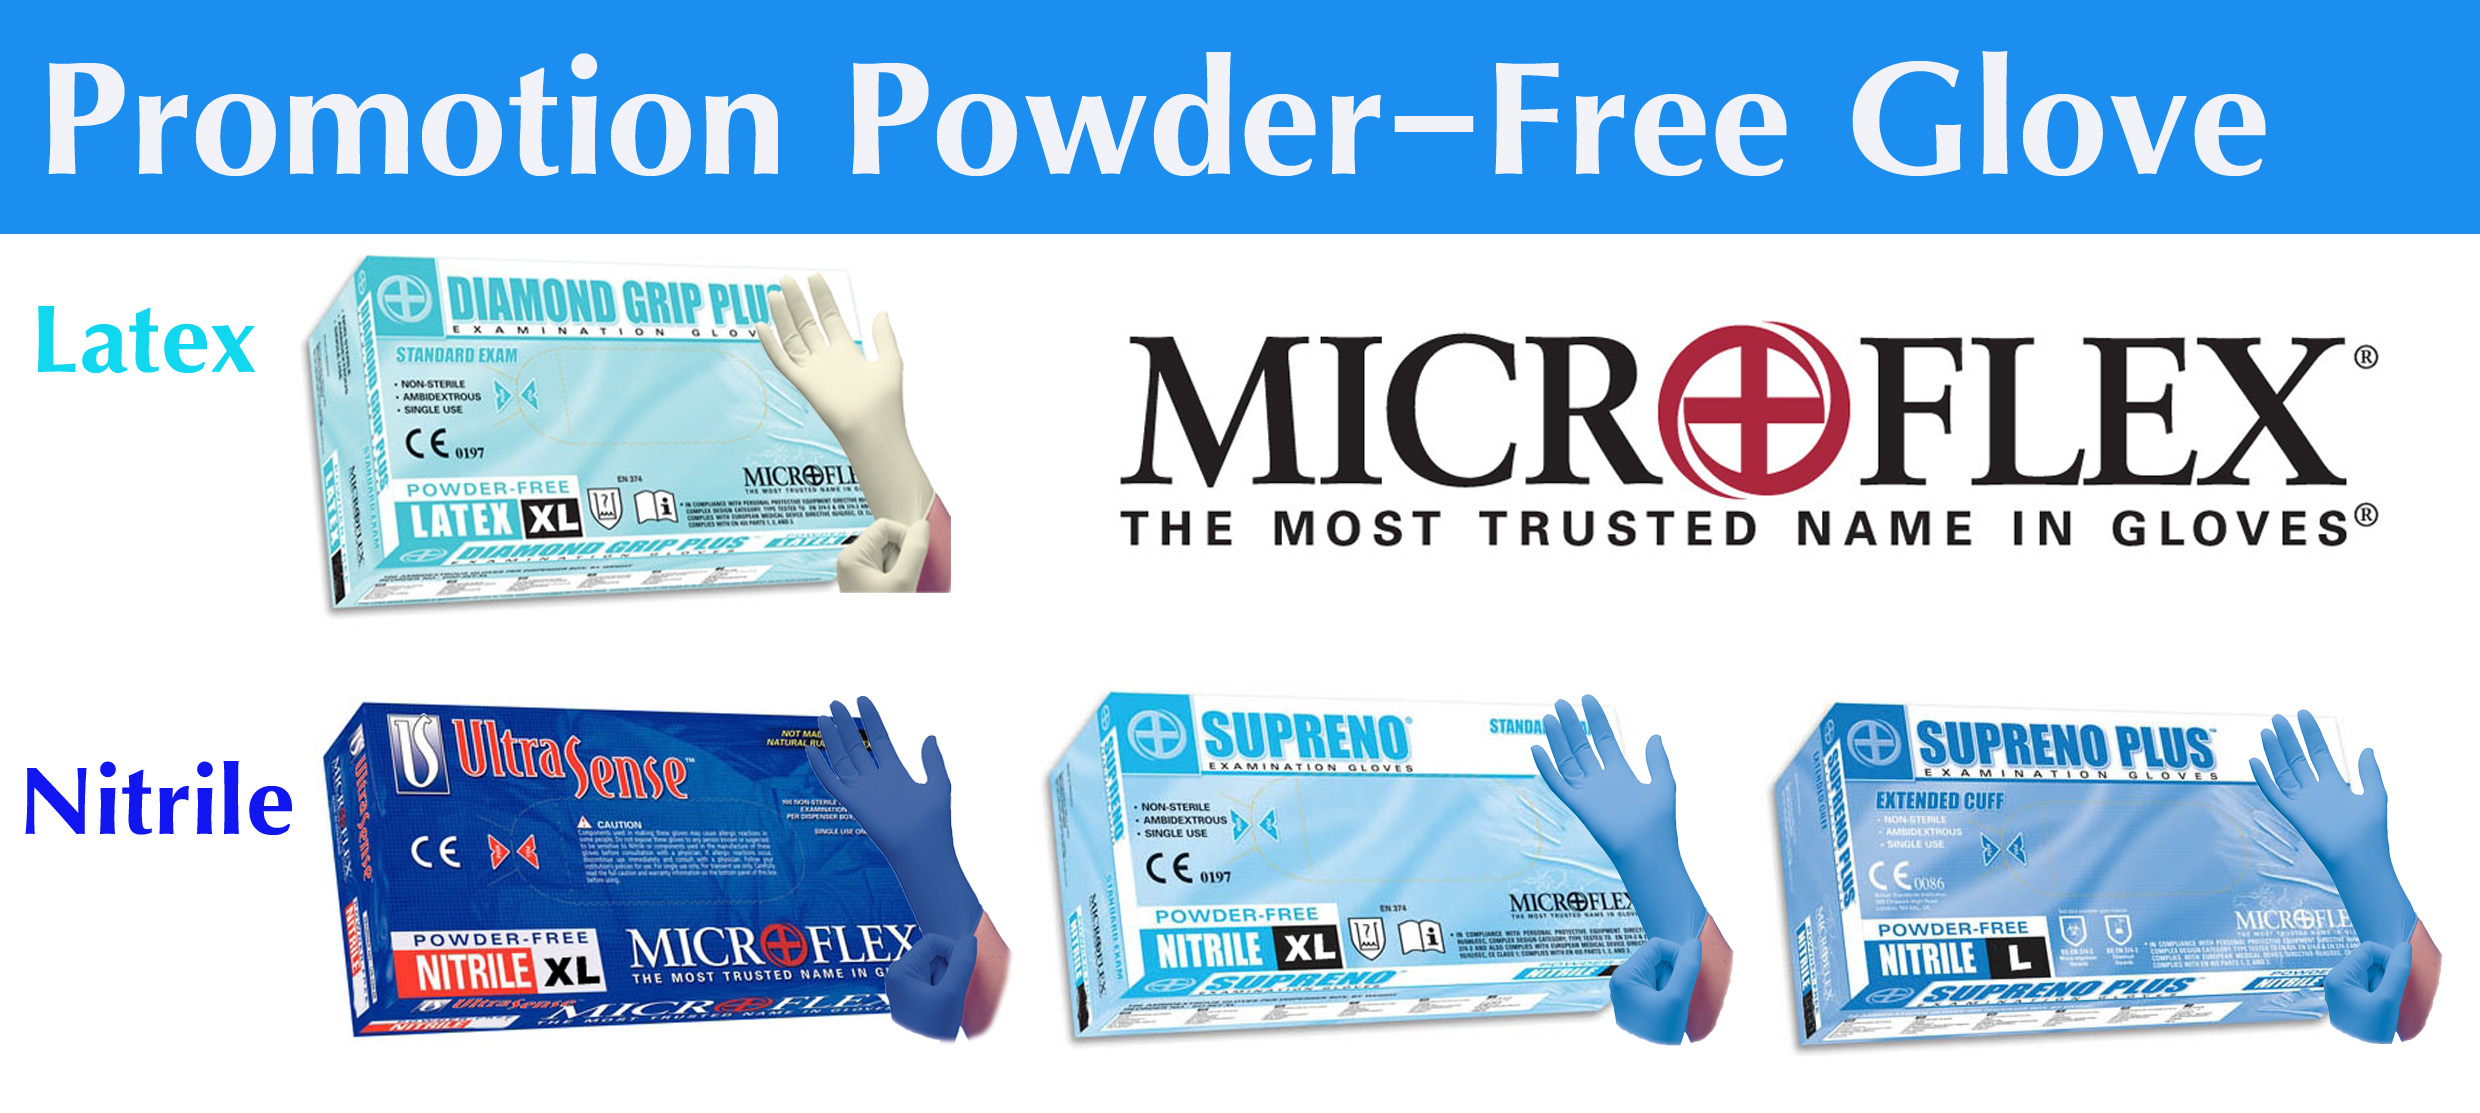 Promotion 2013: Powder-Free Latex / Nitrile Gloves (Microflex)